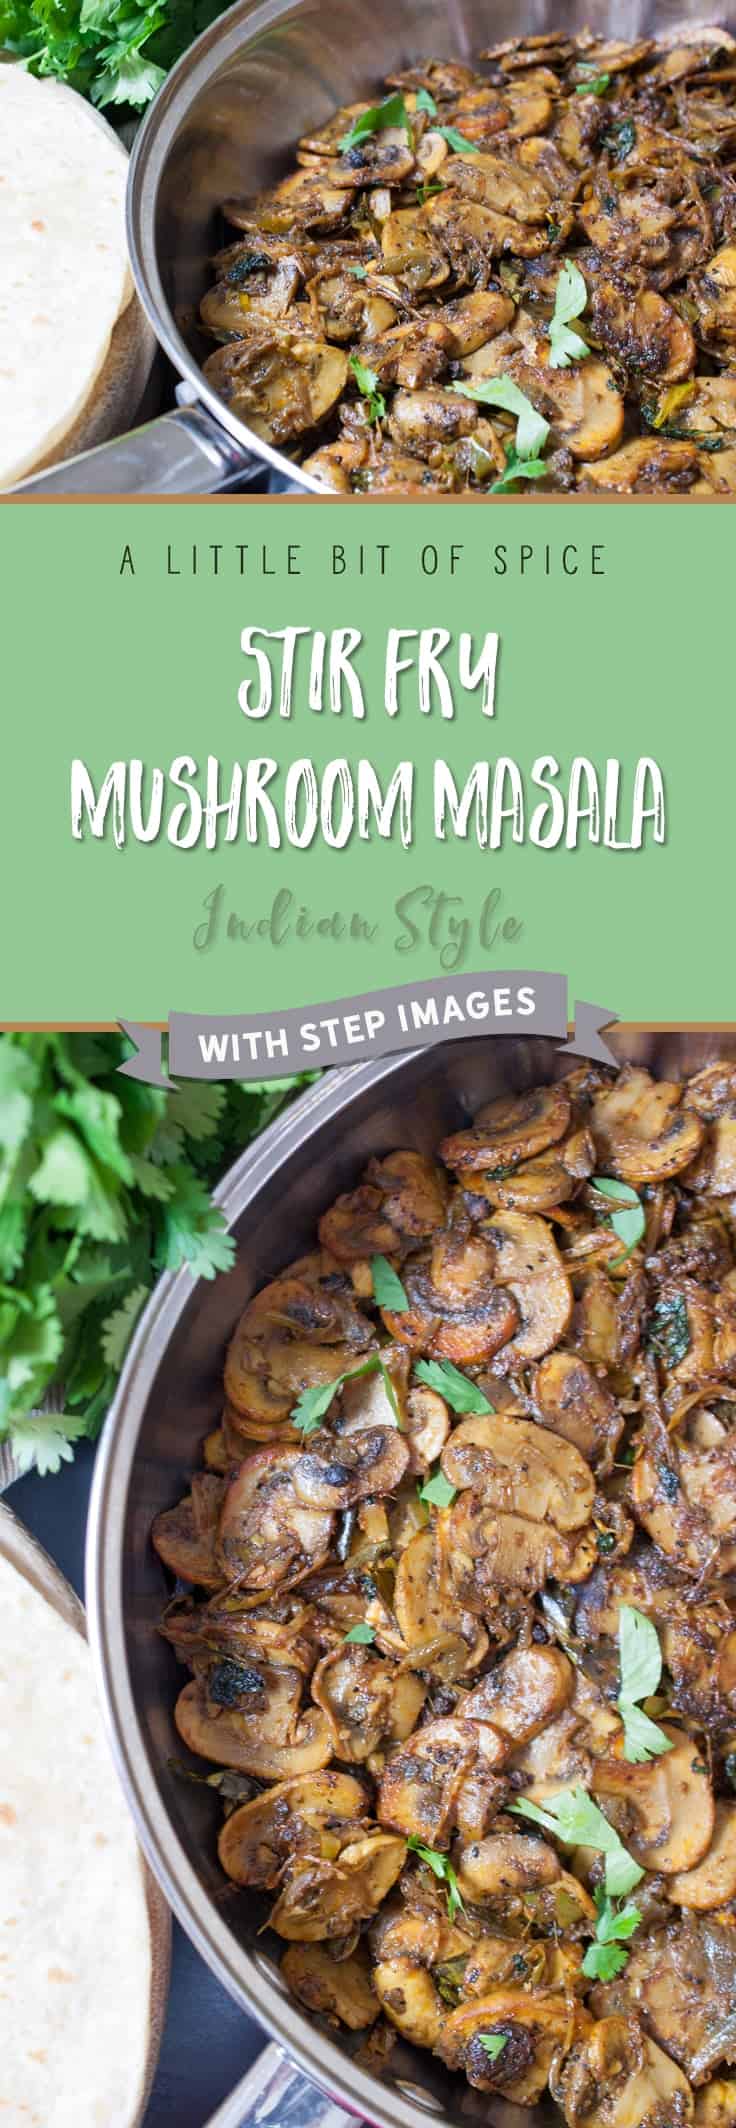 Mushroom masala stir fry (Indian Style) Recipe | A Little Bit of Spice